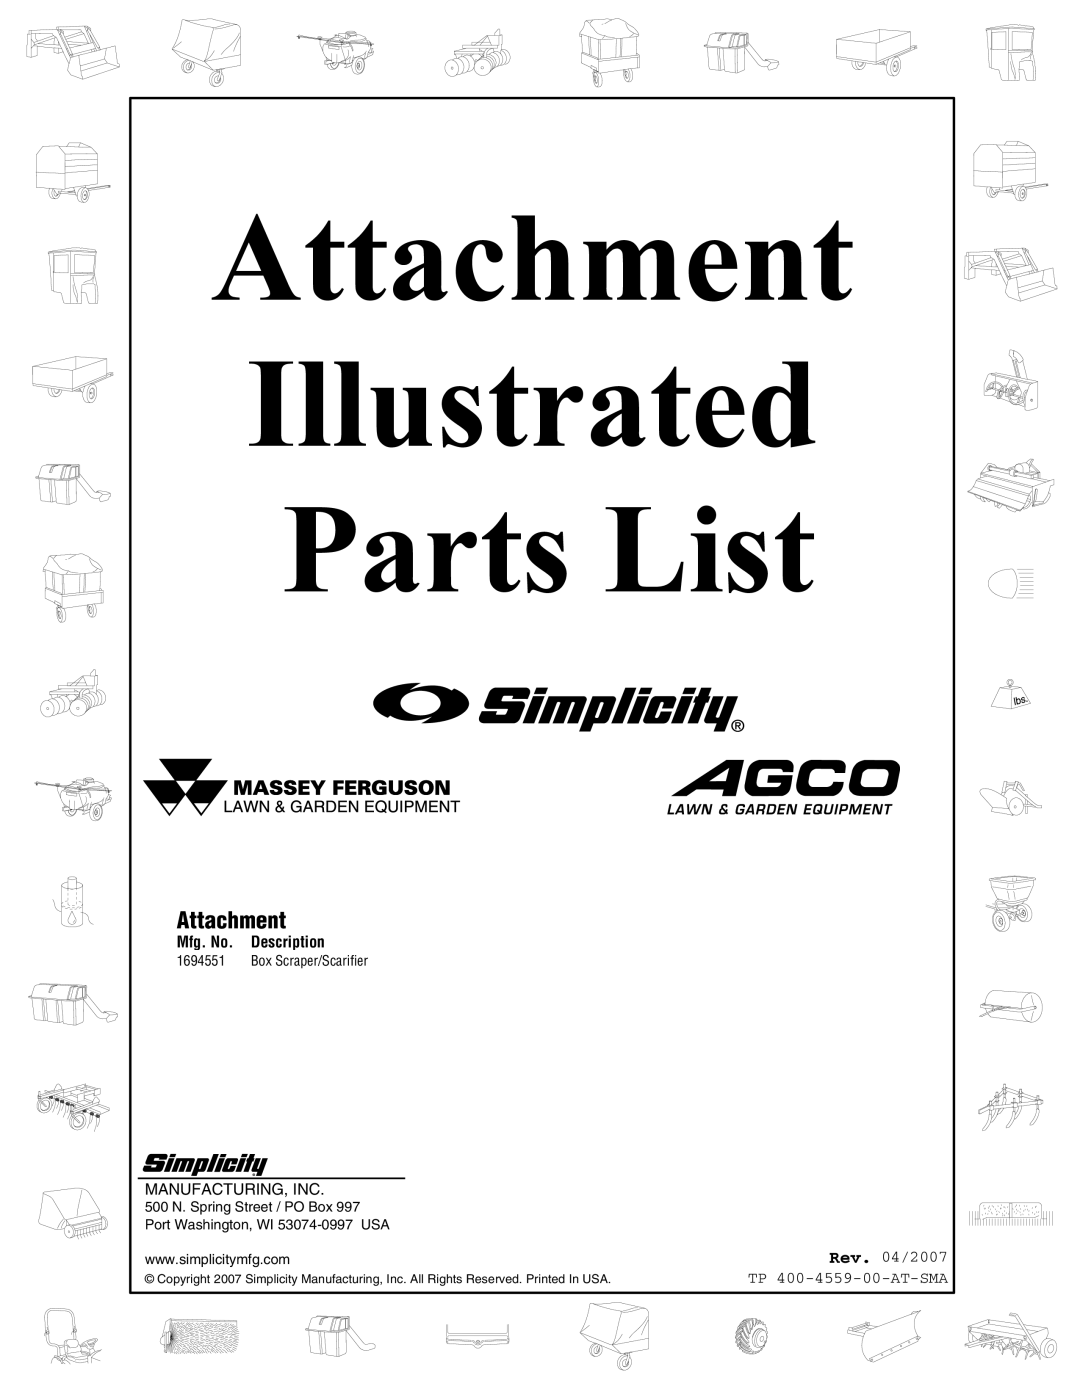 Snapper manual Attachment, Mfg. No, Description, Rev. 04/2007, TP 400-4559-00-AT-SMA, Illustrated, Parts List 